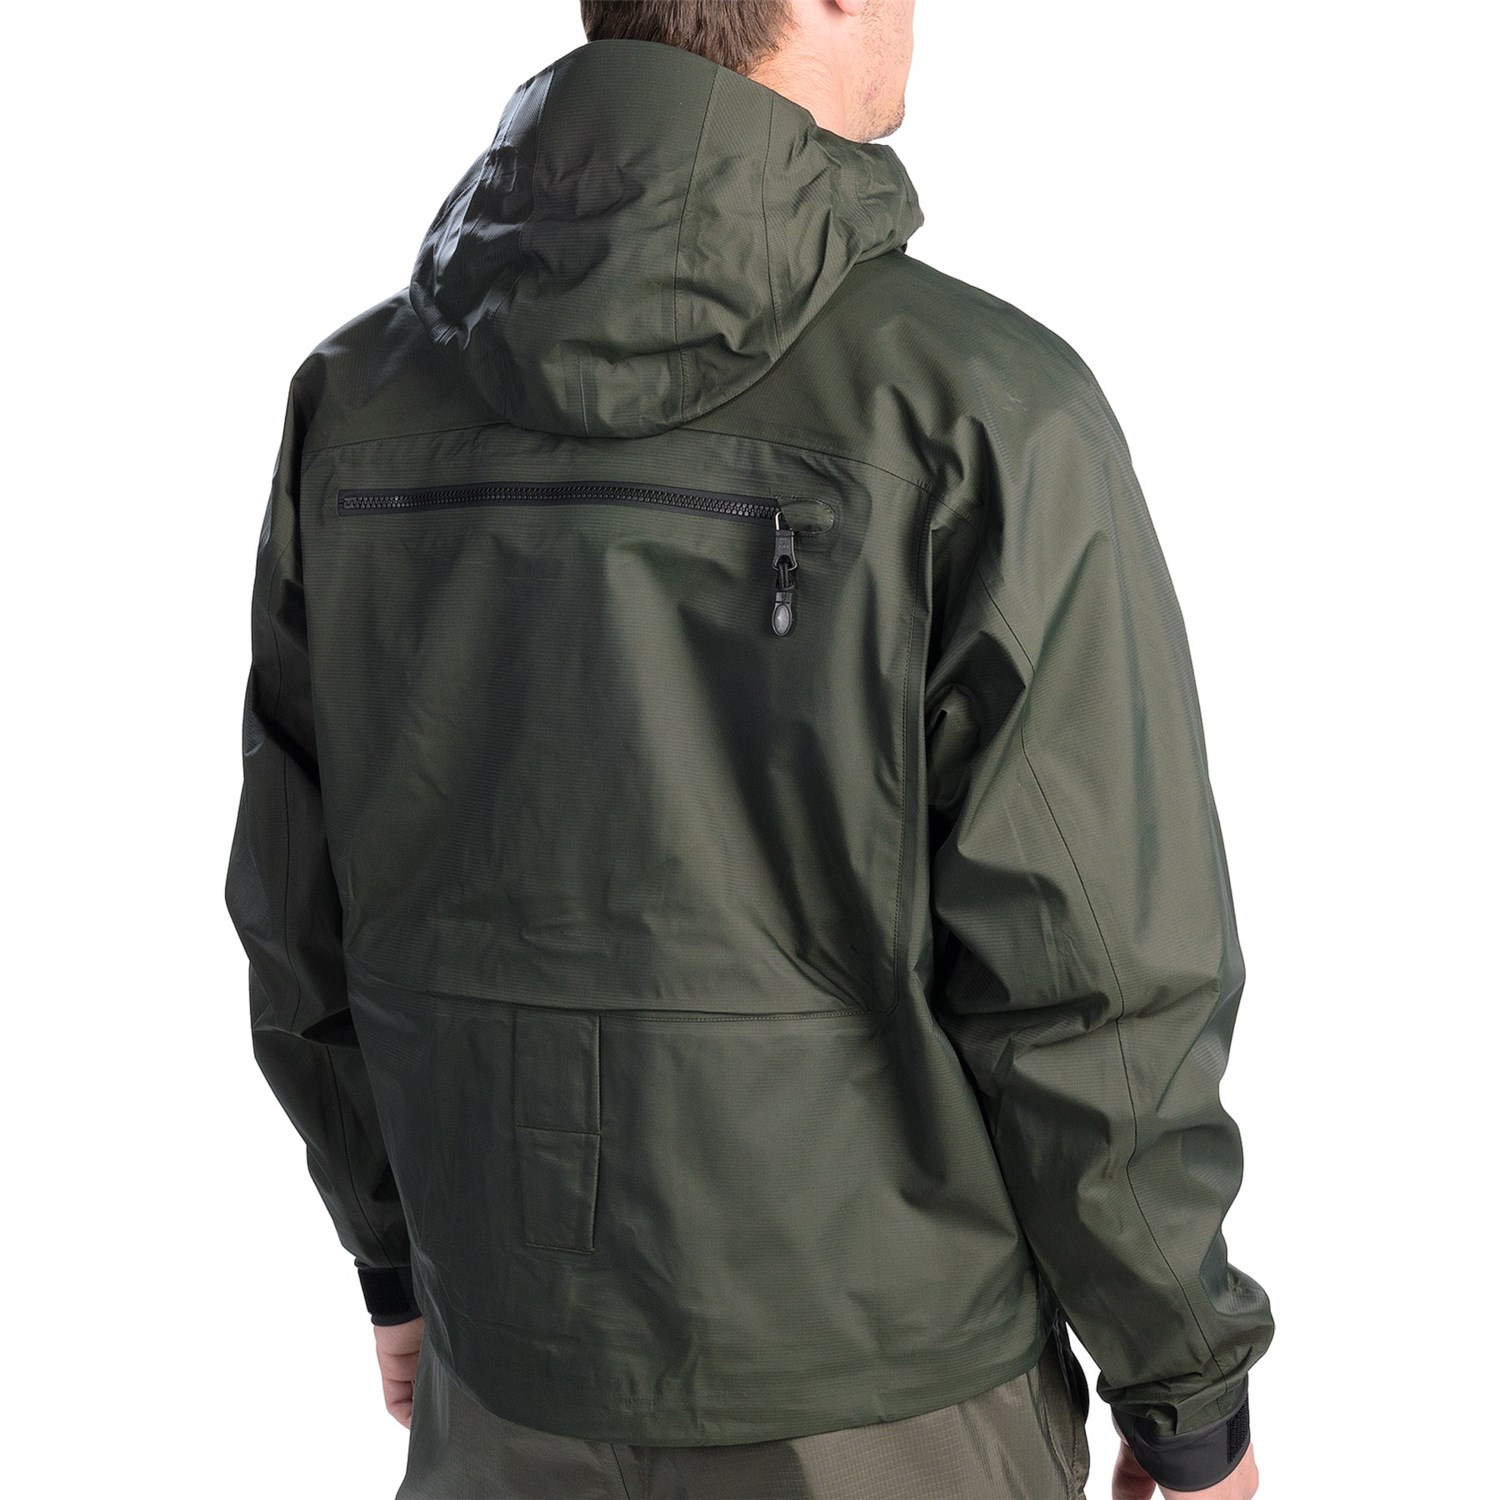 Patagonia SST Fishing Jacket (For Men) 9216Y